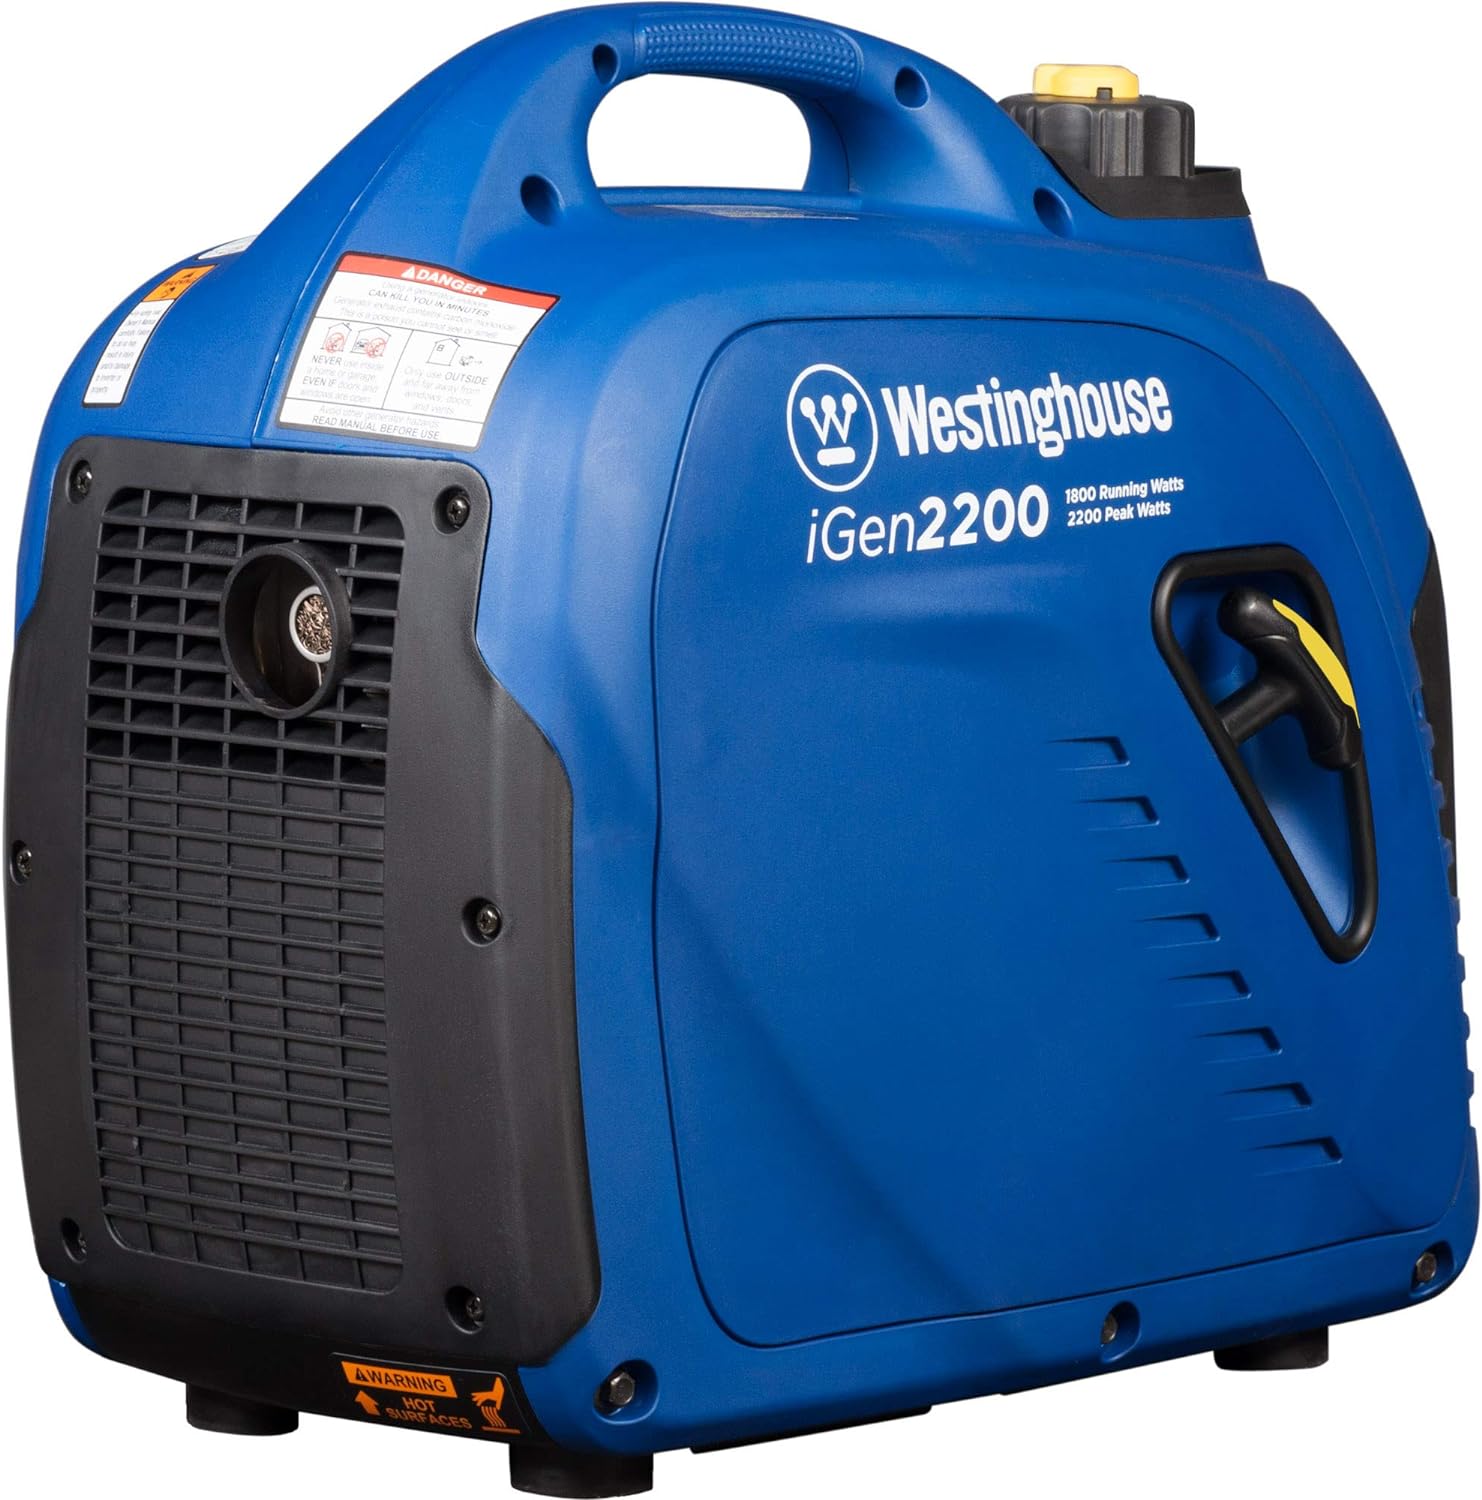 Westinghouse, Westinghouse iGen2200c Inverter Generator 1800W/2200W 20 Amp Recoil Start Gas with CO Sensor New